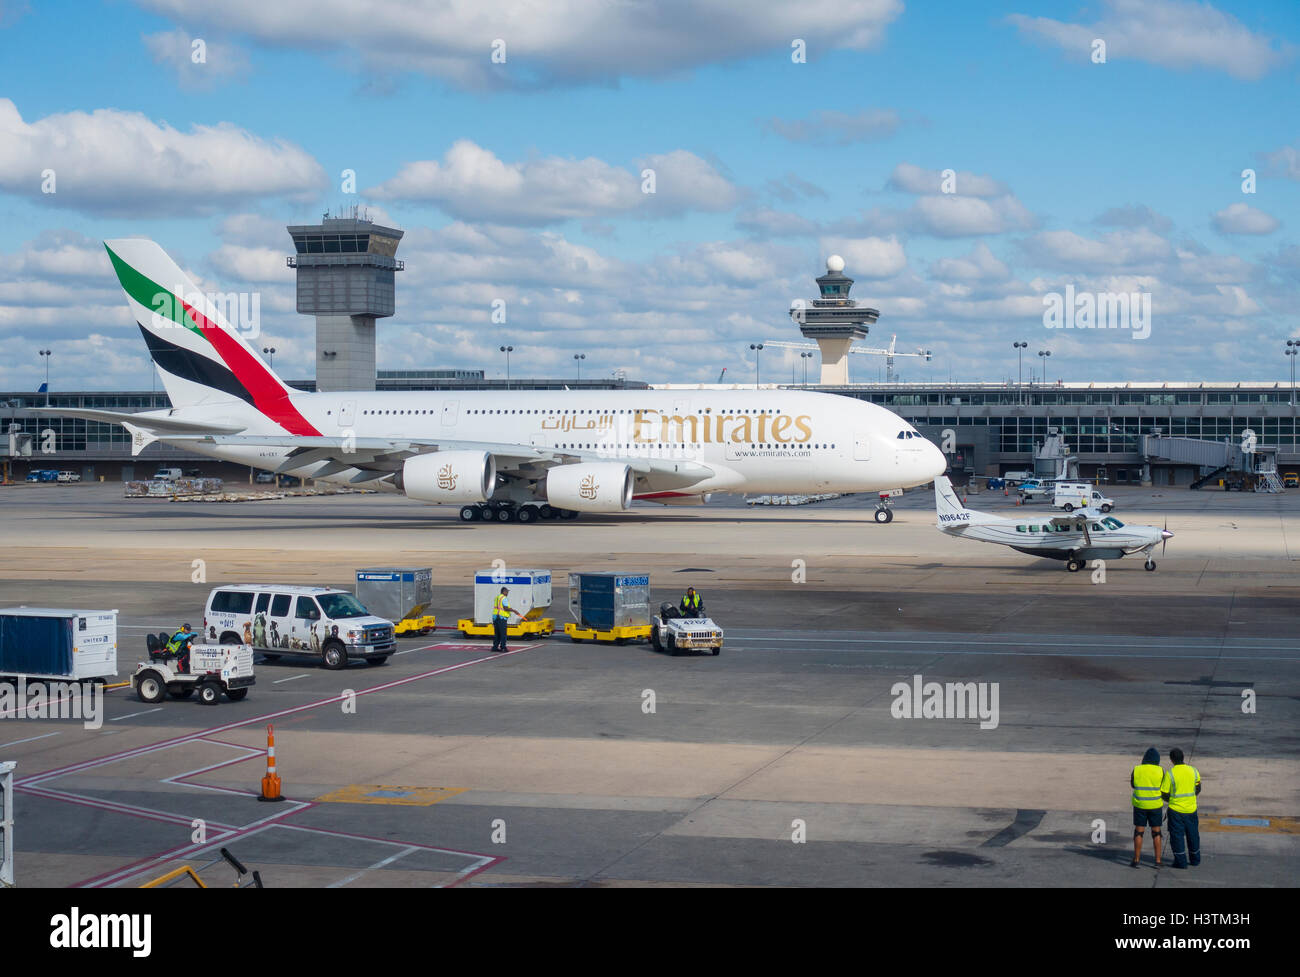 INTERNATIONALER Flughafen DULLES, VIRGINIA, USA - Emirates Airline Airbus A380-800 kommerziellen Passagier Jet Airliner taxis. Stockfoto